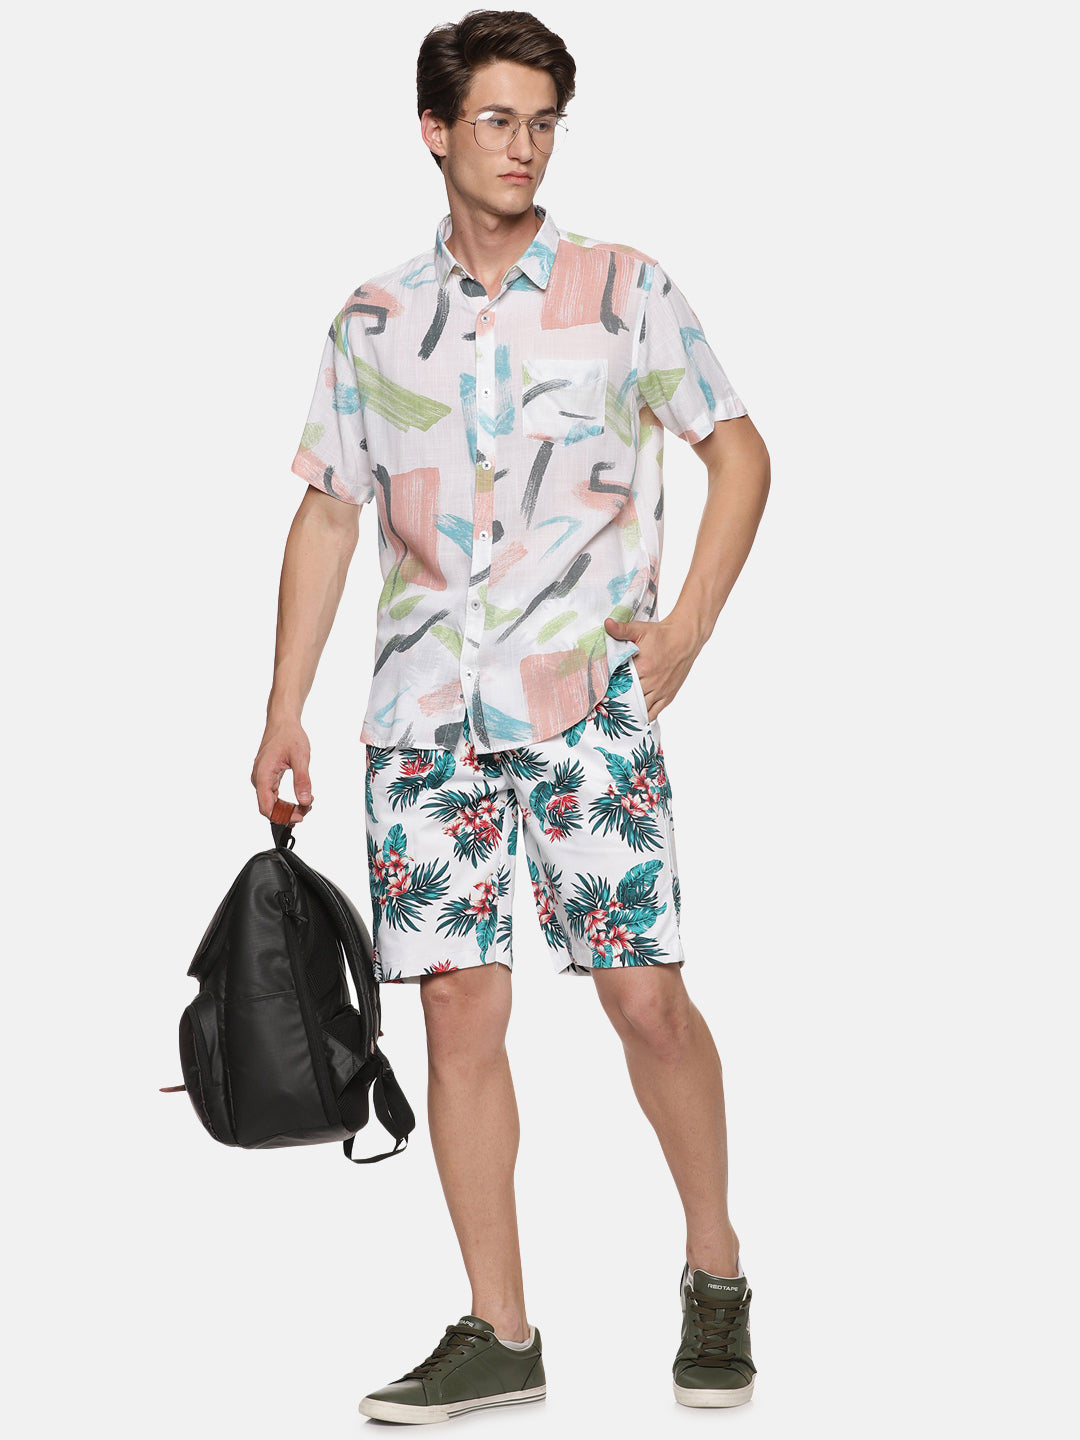 Carnival Men's Tropical Printed Shorts